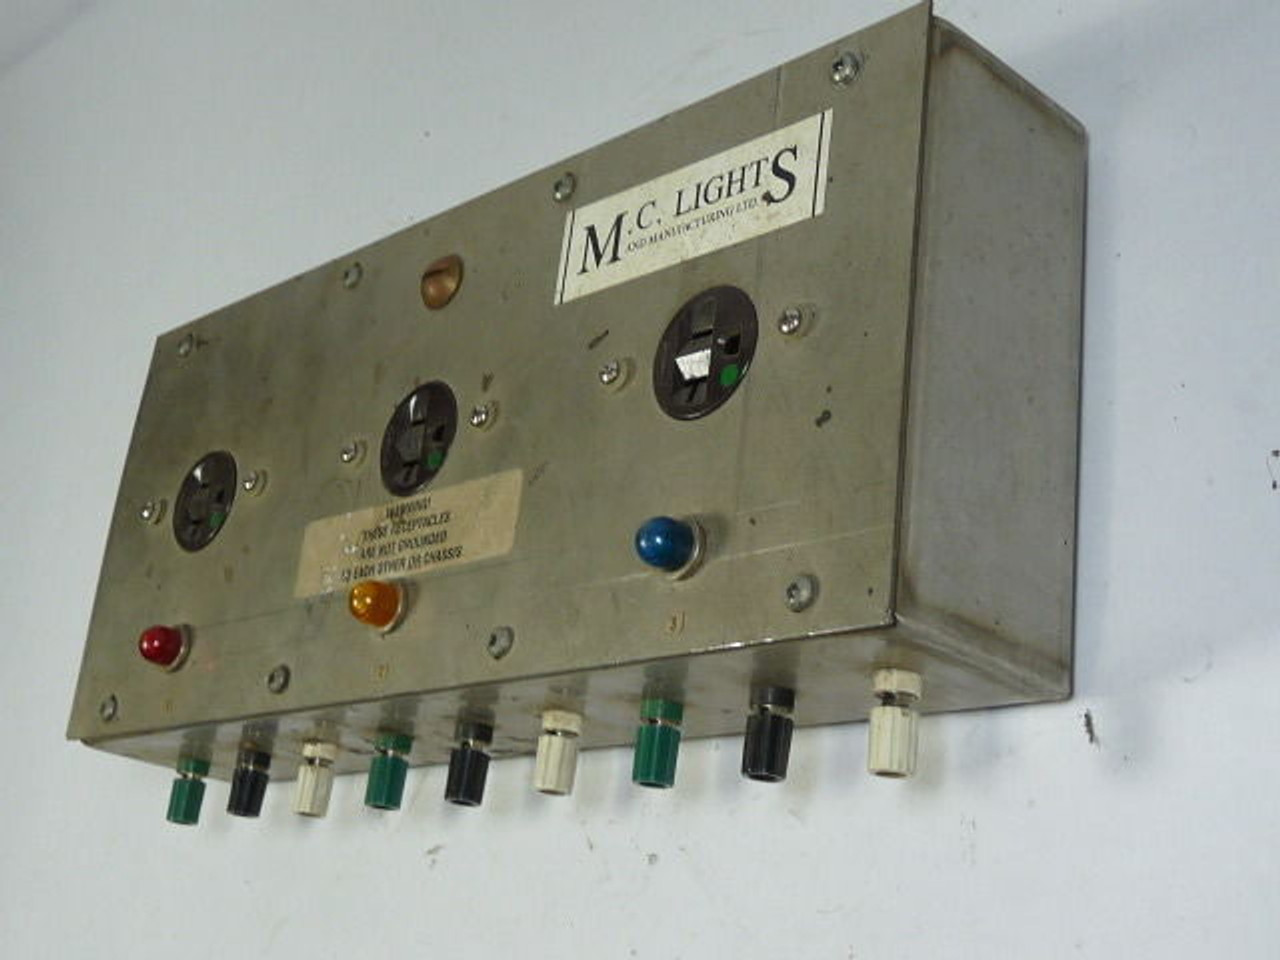 MC Lights Control Box USED